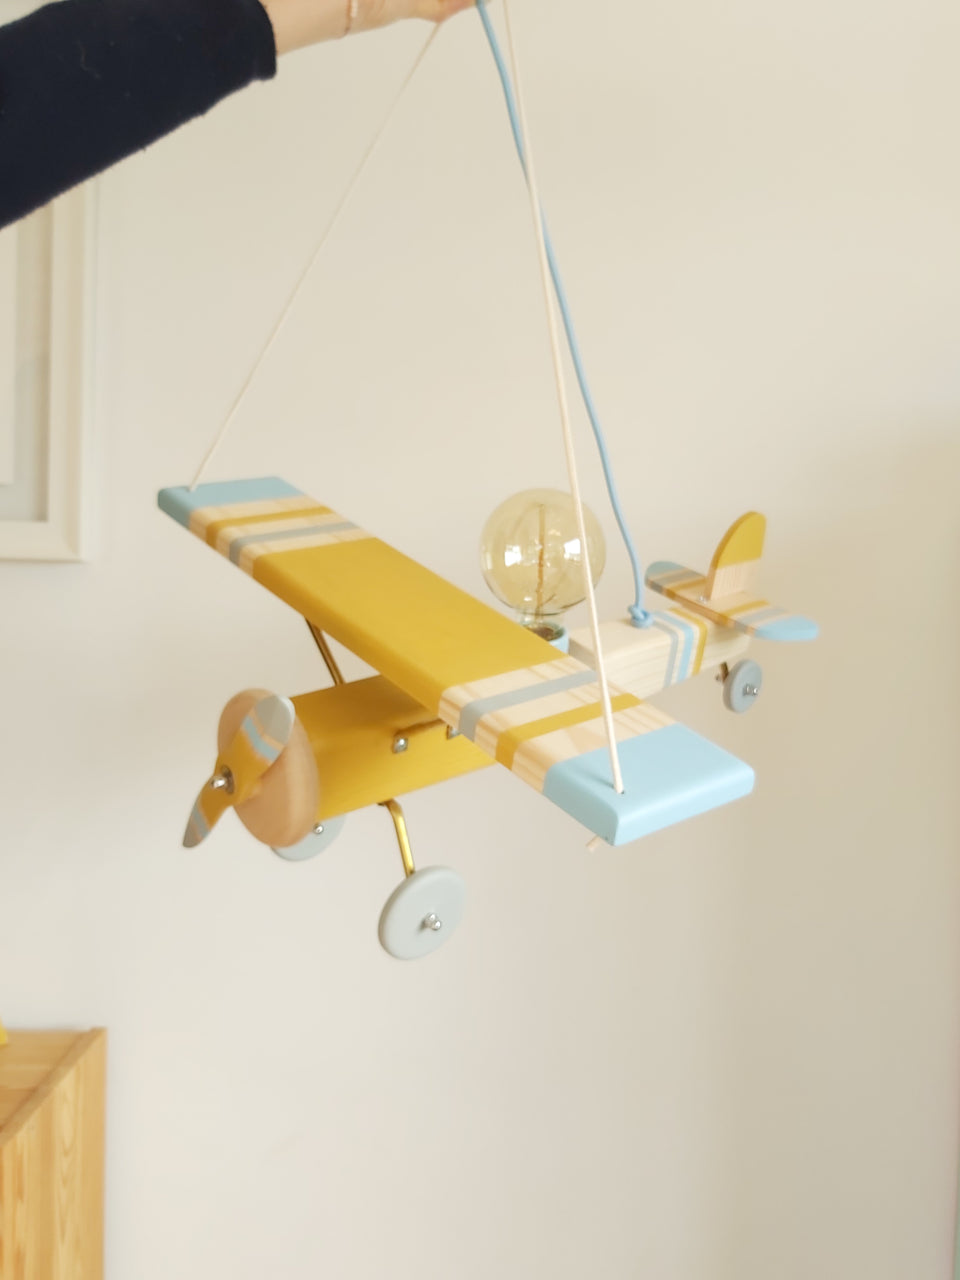 Candeeiro Avião Tecto Mostarda - Ceiling wood Airplane Lamp Mustard